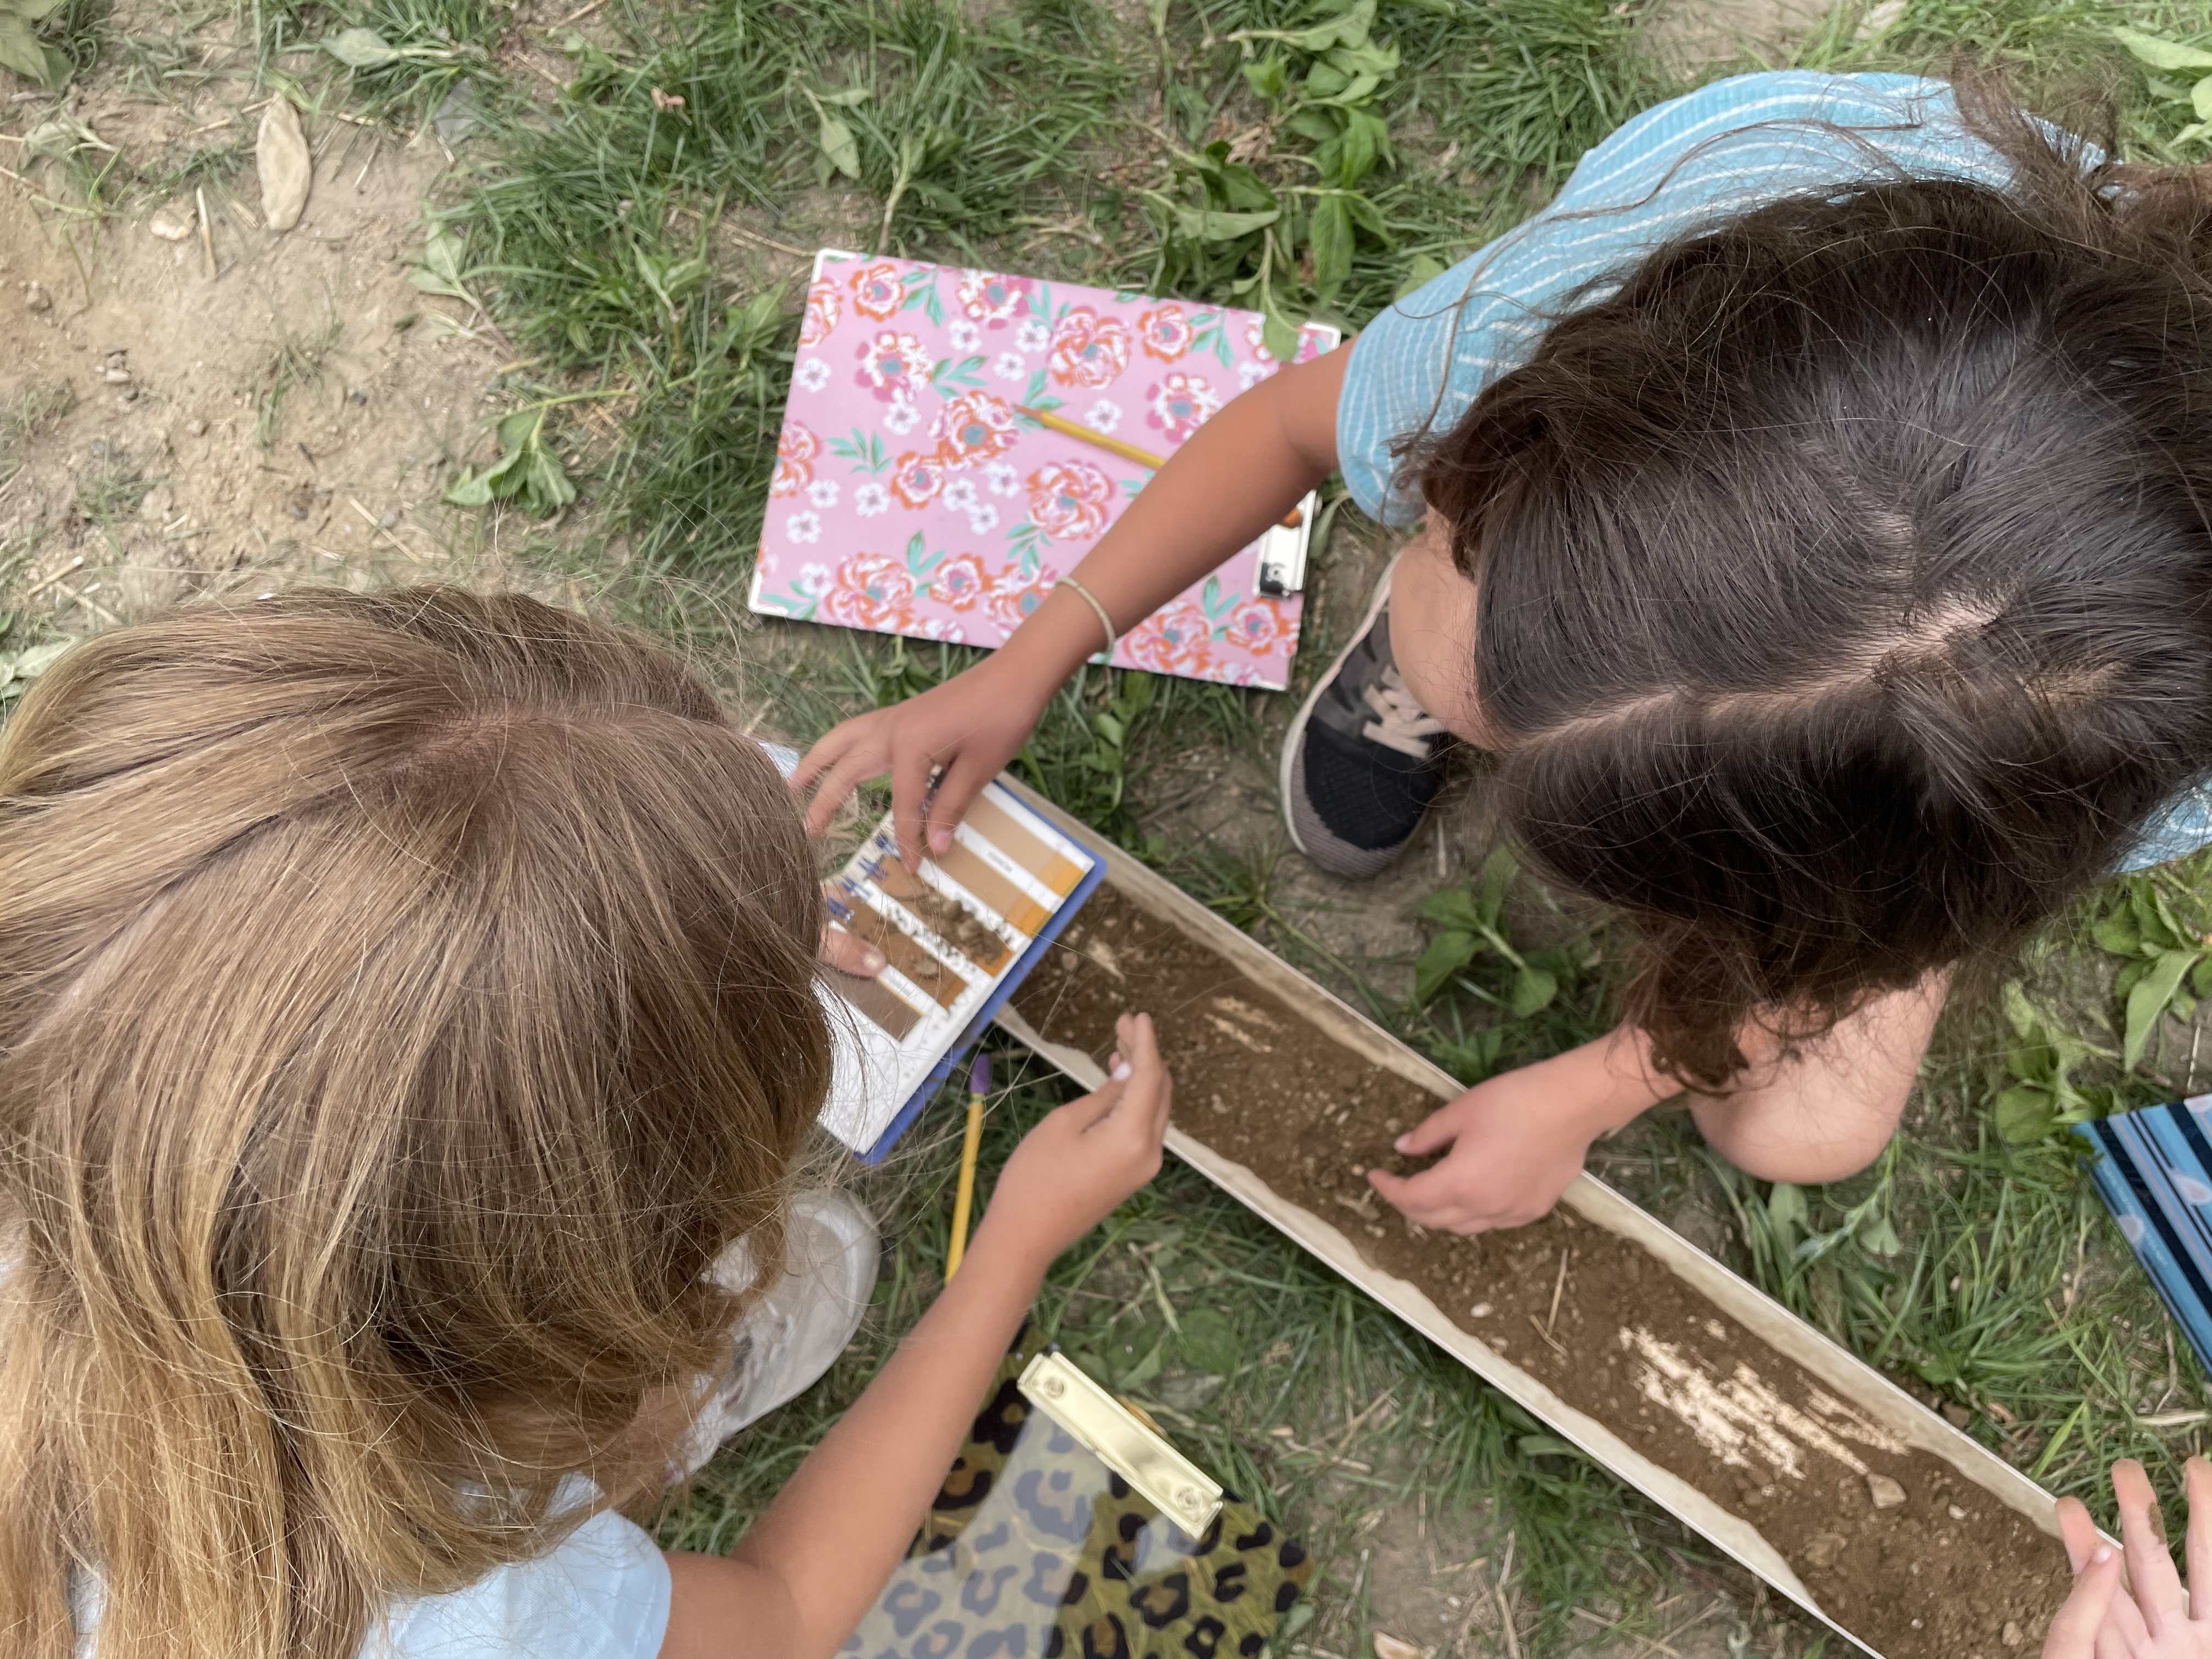 Students explore soil core with soil color book